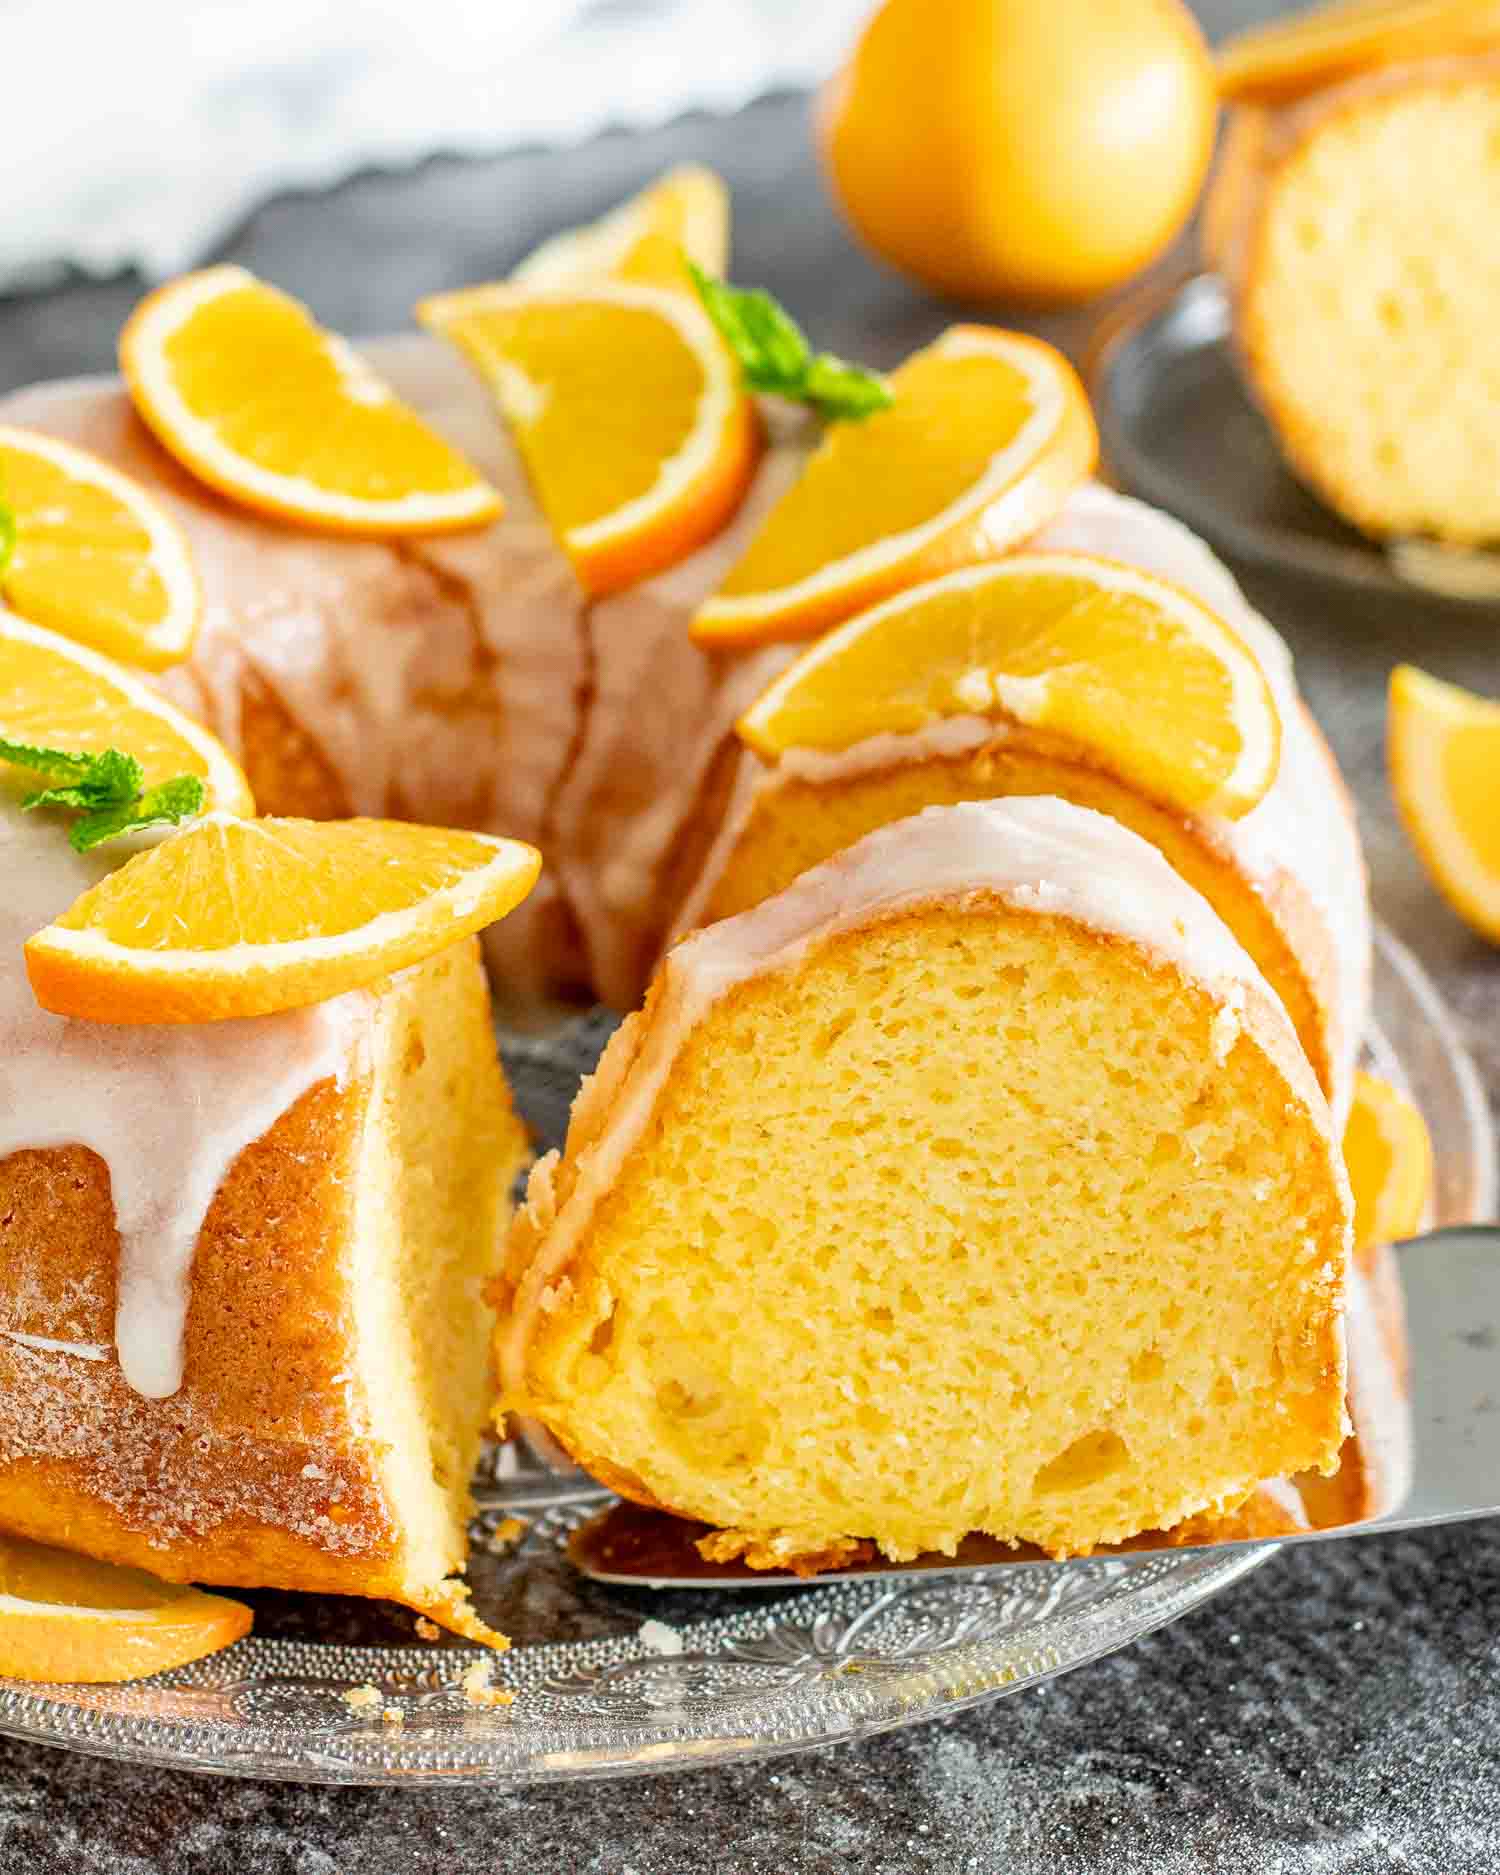 a freshly baked harvey wallbanger cake garnished with orange slices on a cake platter.